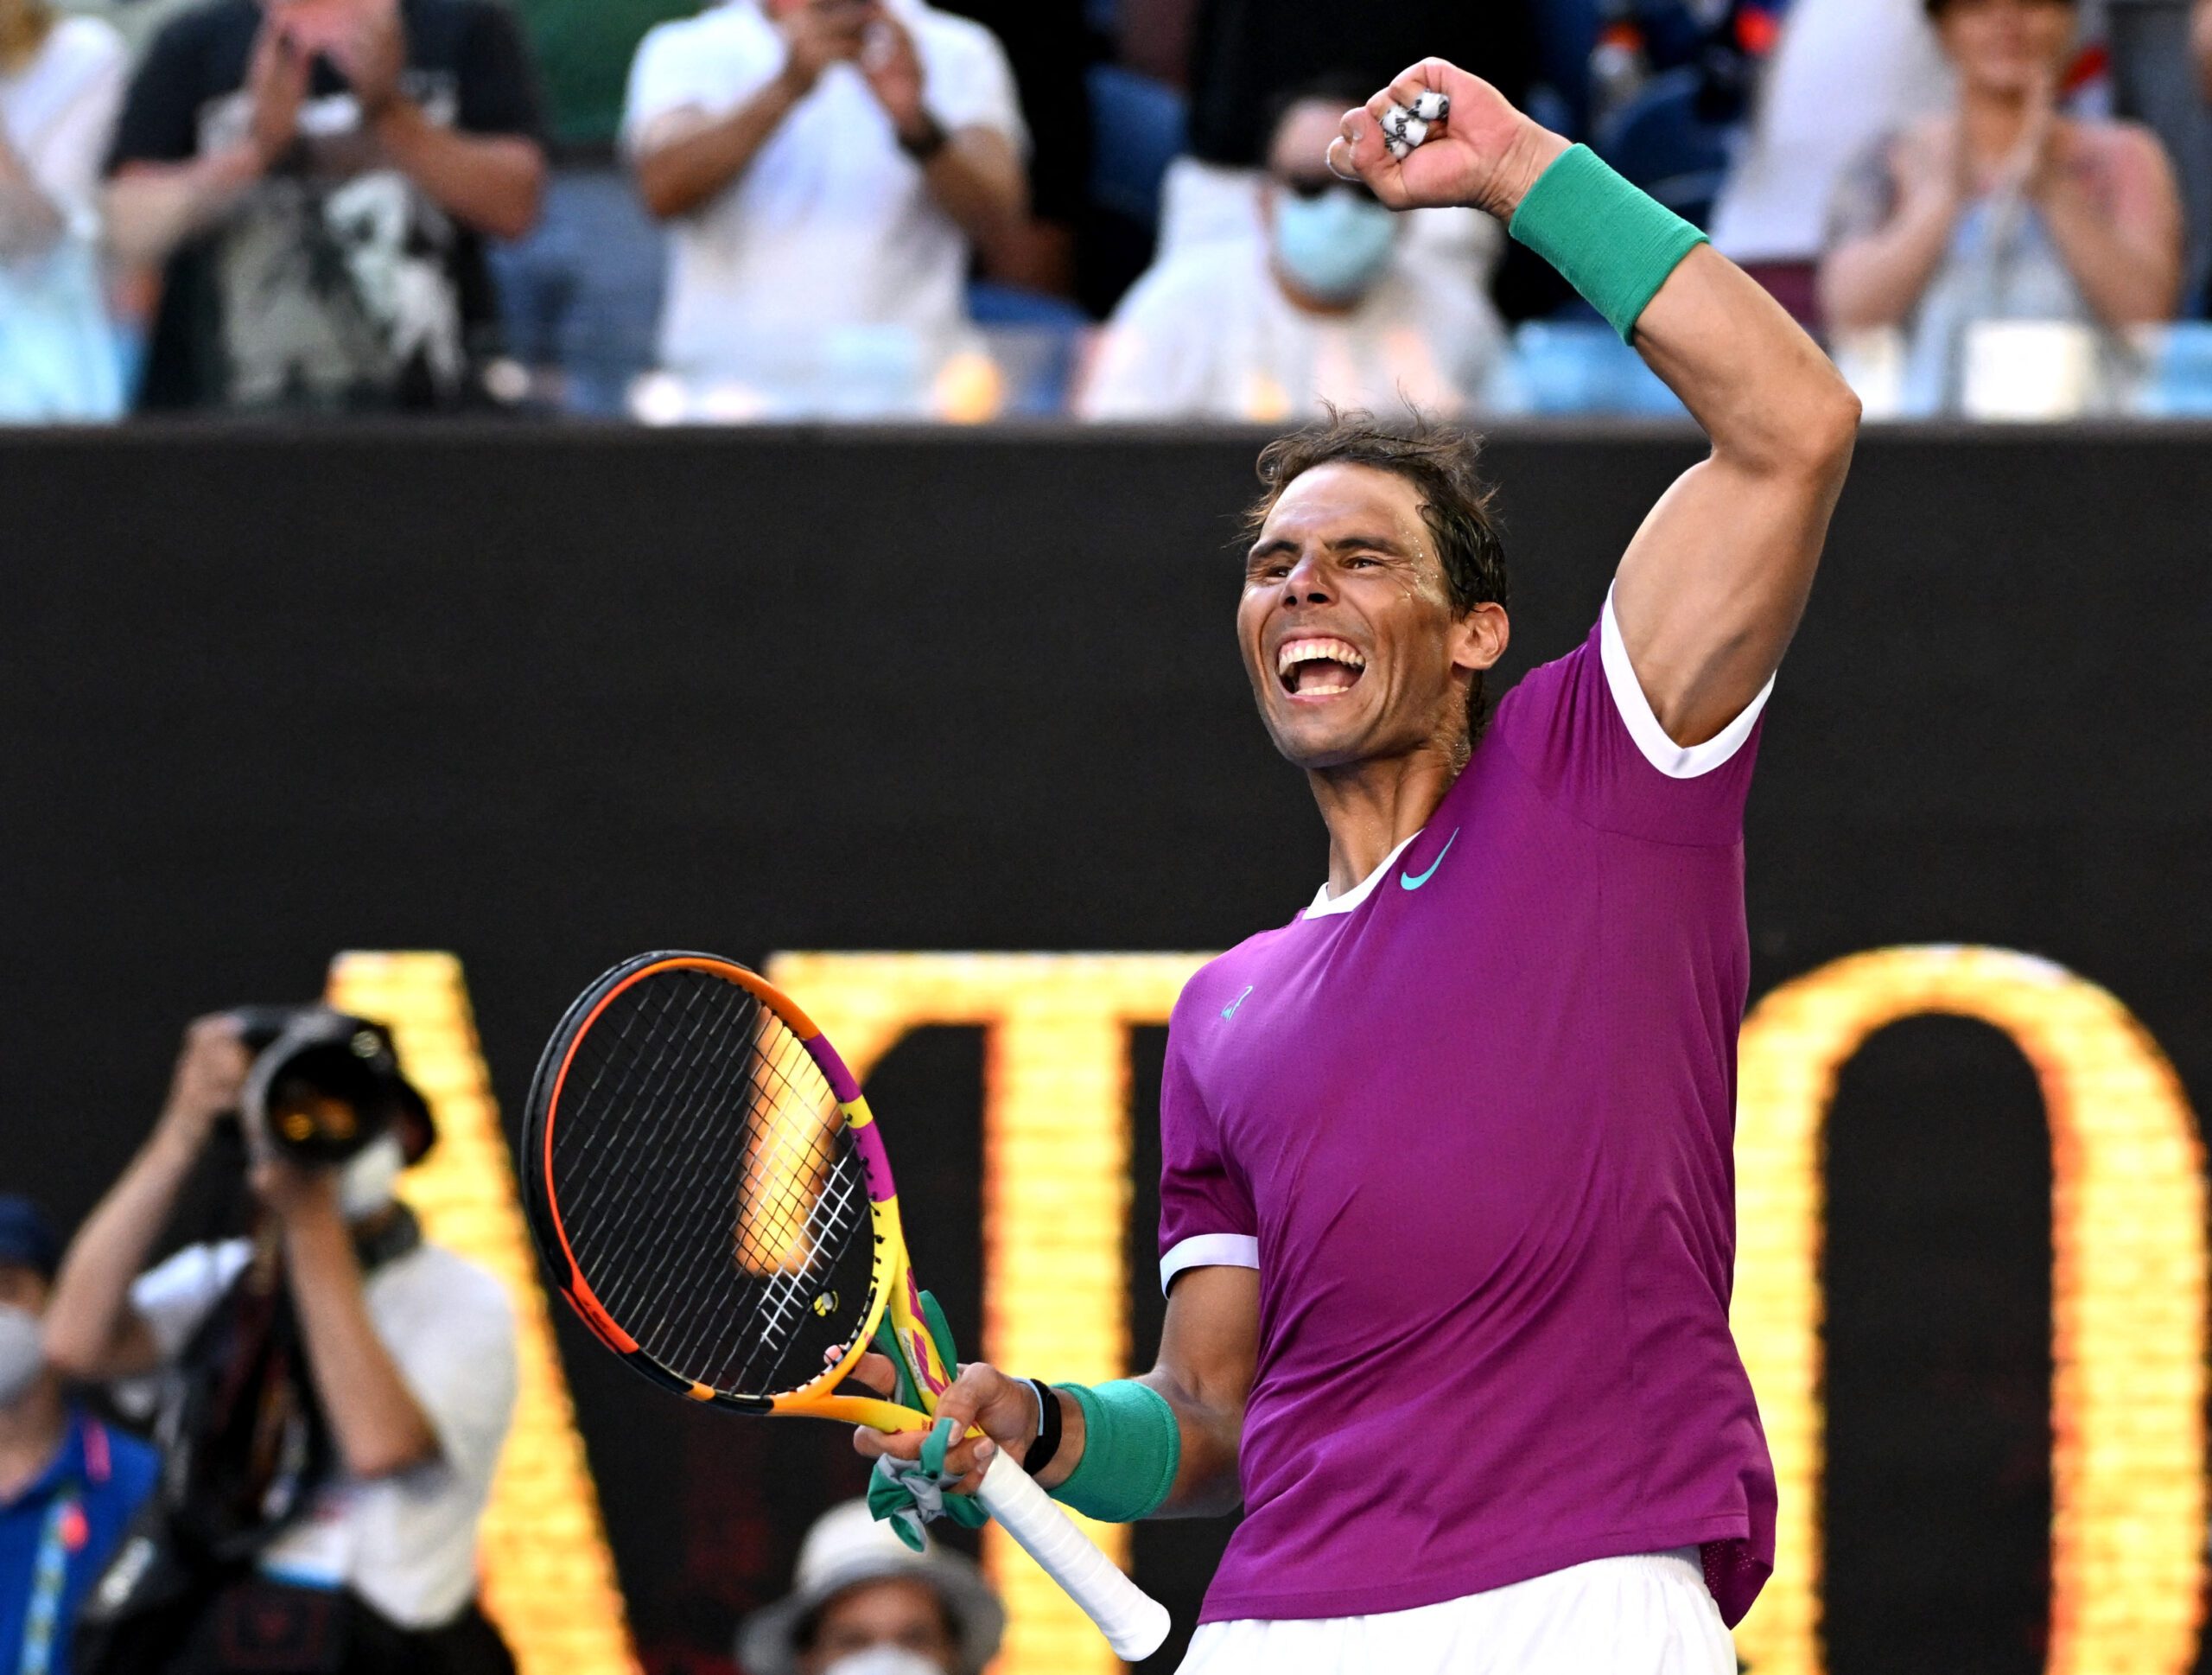 Rafa Nadal stays on track of a record-breaking 21st Grand Slam title.